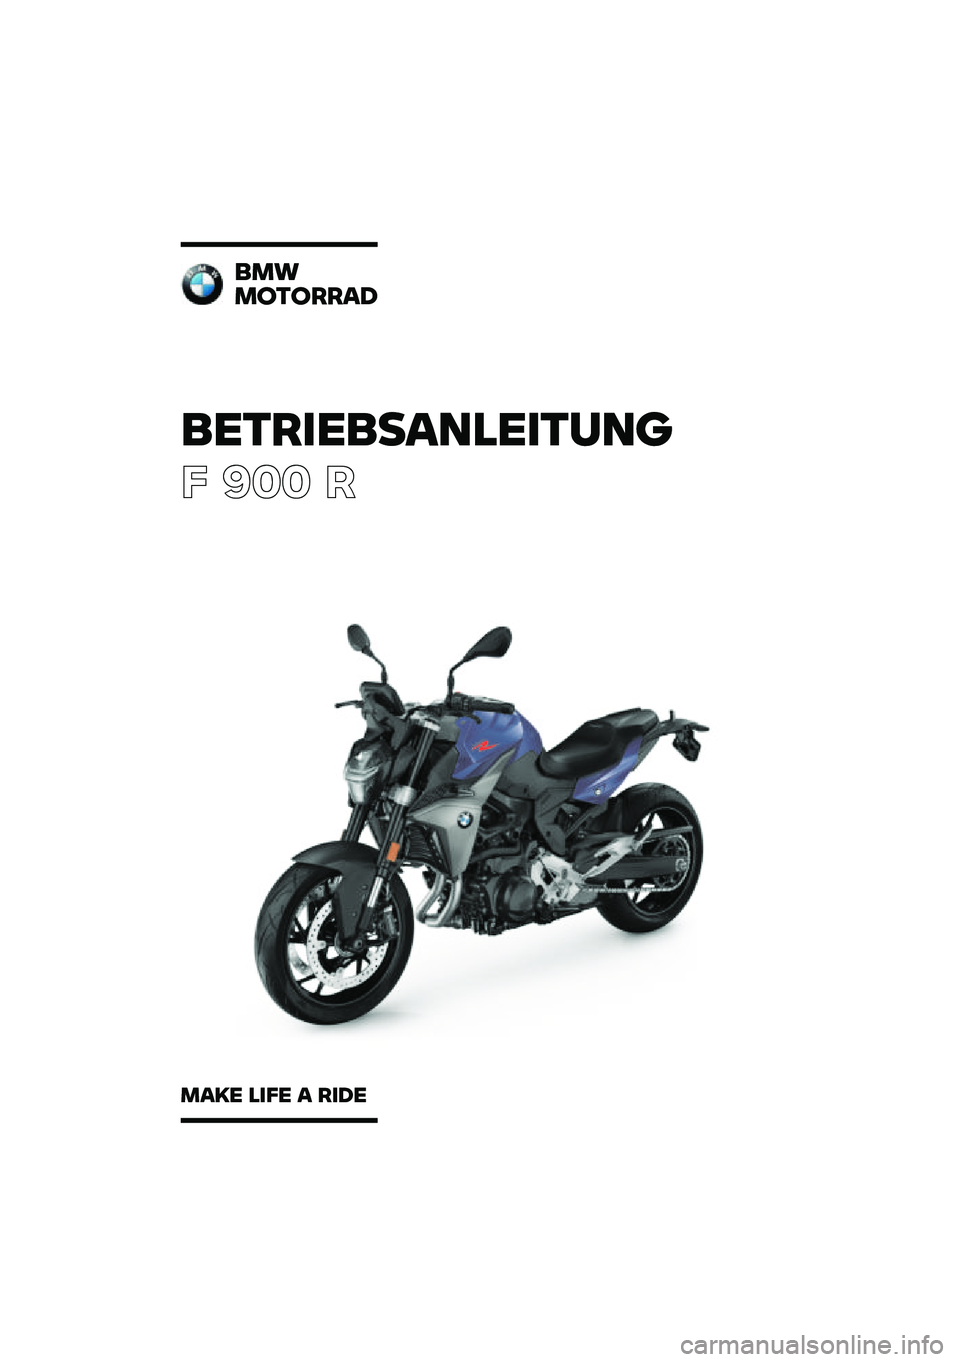 BMW MOTORRAD F 900 R 2020  Betriebsanleitung (in German) ���������\b�	�
�����	�\f
� ��� �
��
�
�
������\b�
�
�\b�� �
��� �\b ���� 